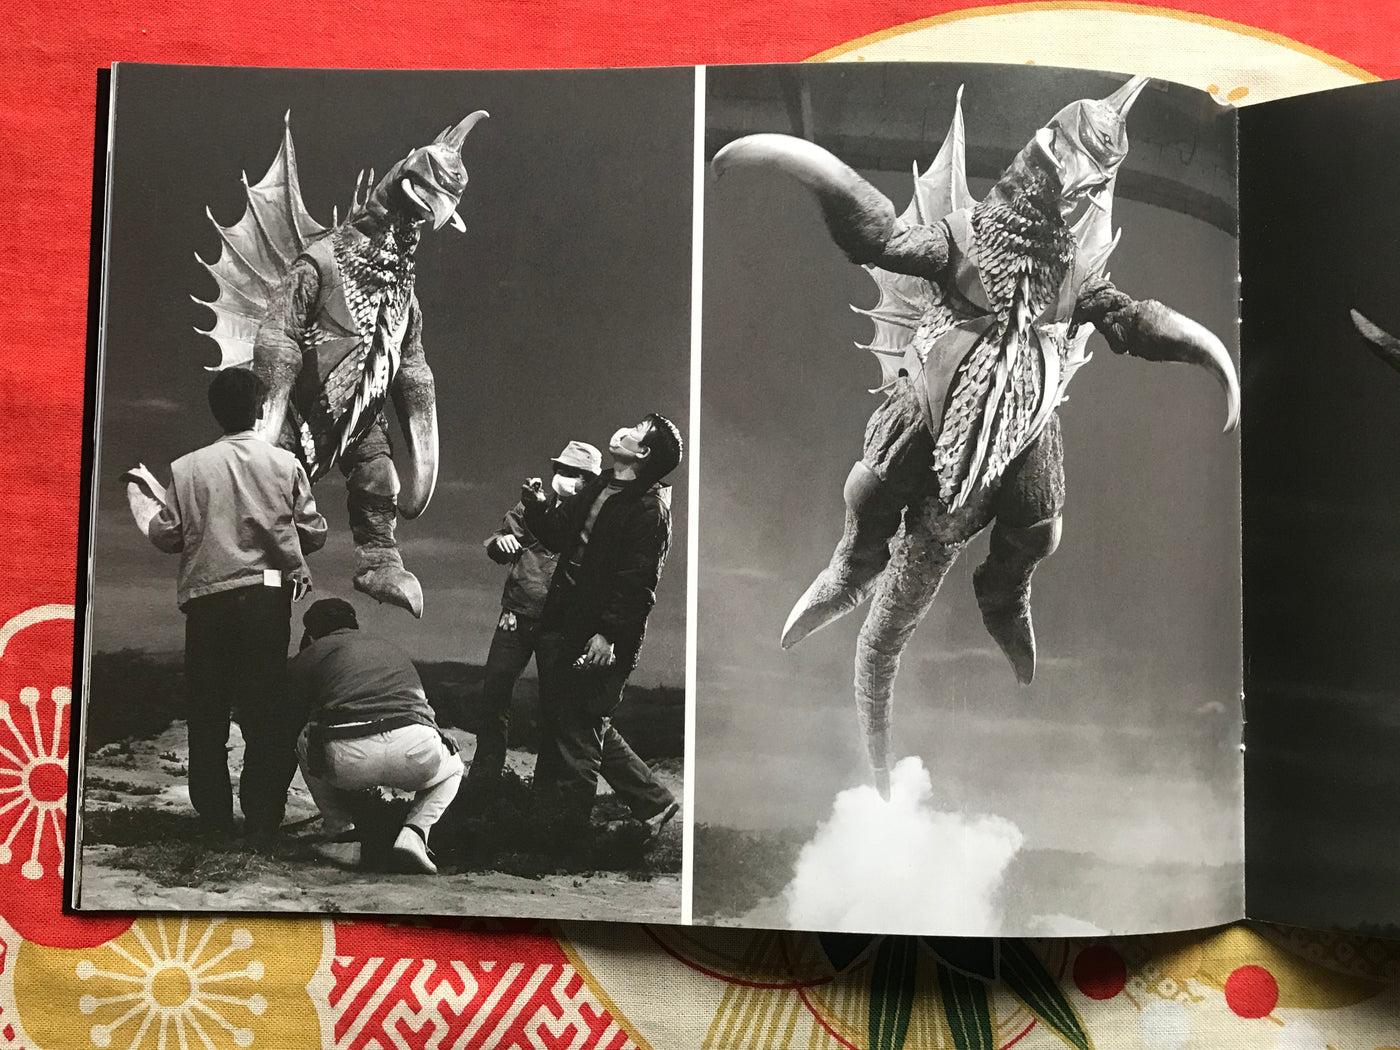 Gigan 1972 Toho SFX Movies Authentic Visual Book